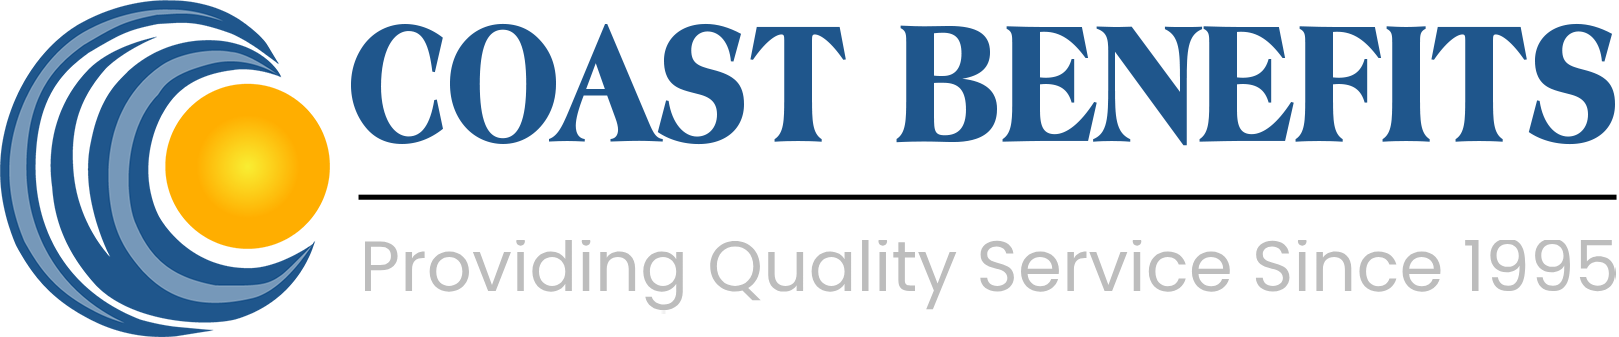 Coast Benefits Logo Blue Variant